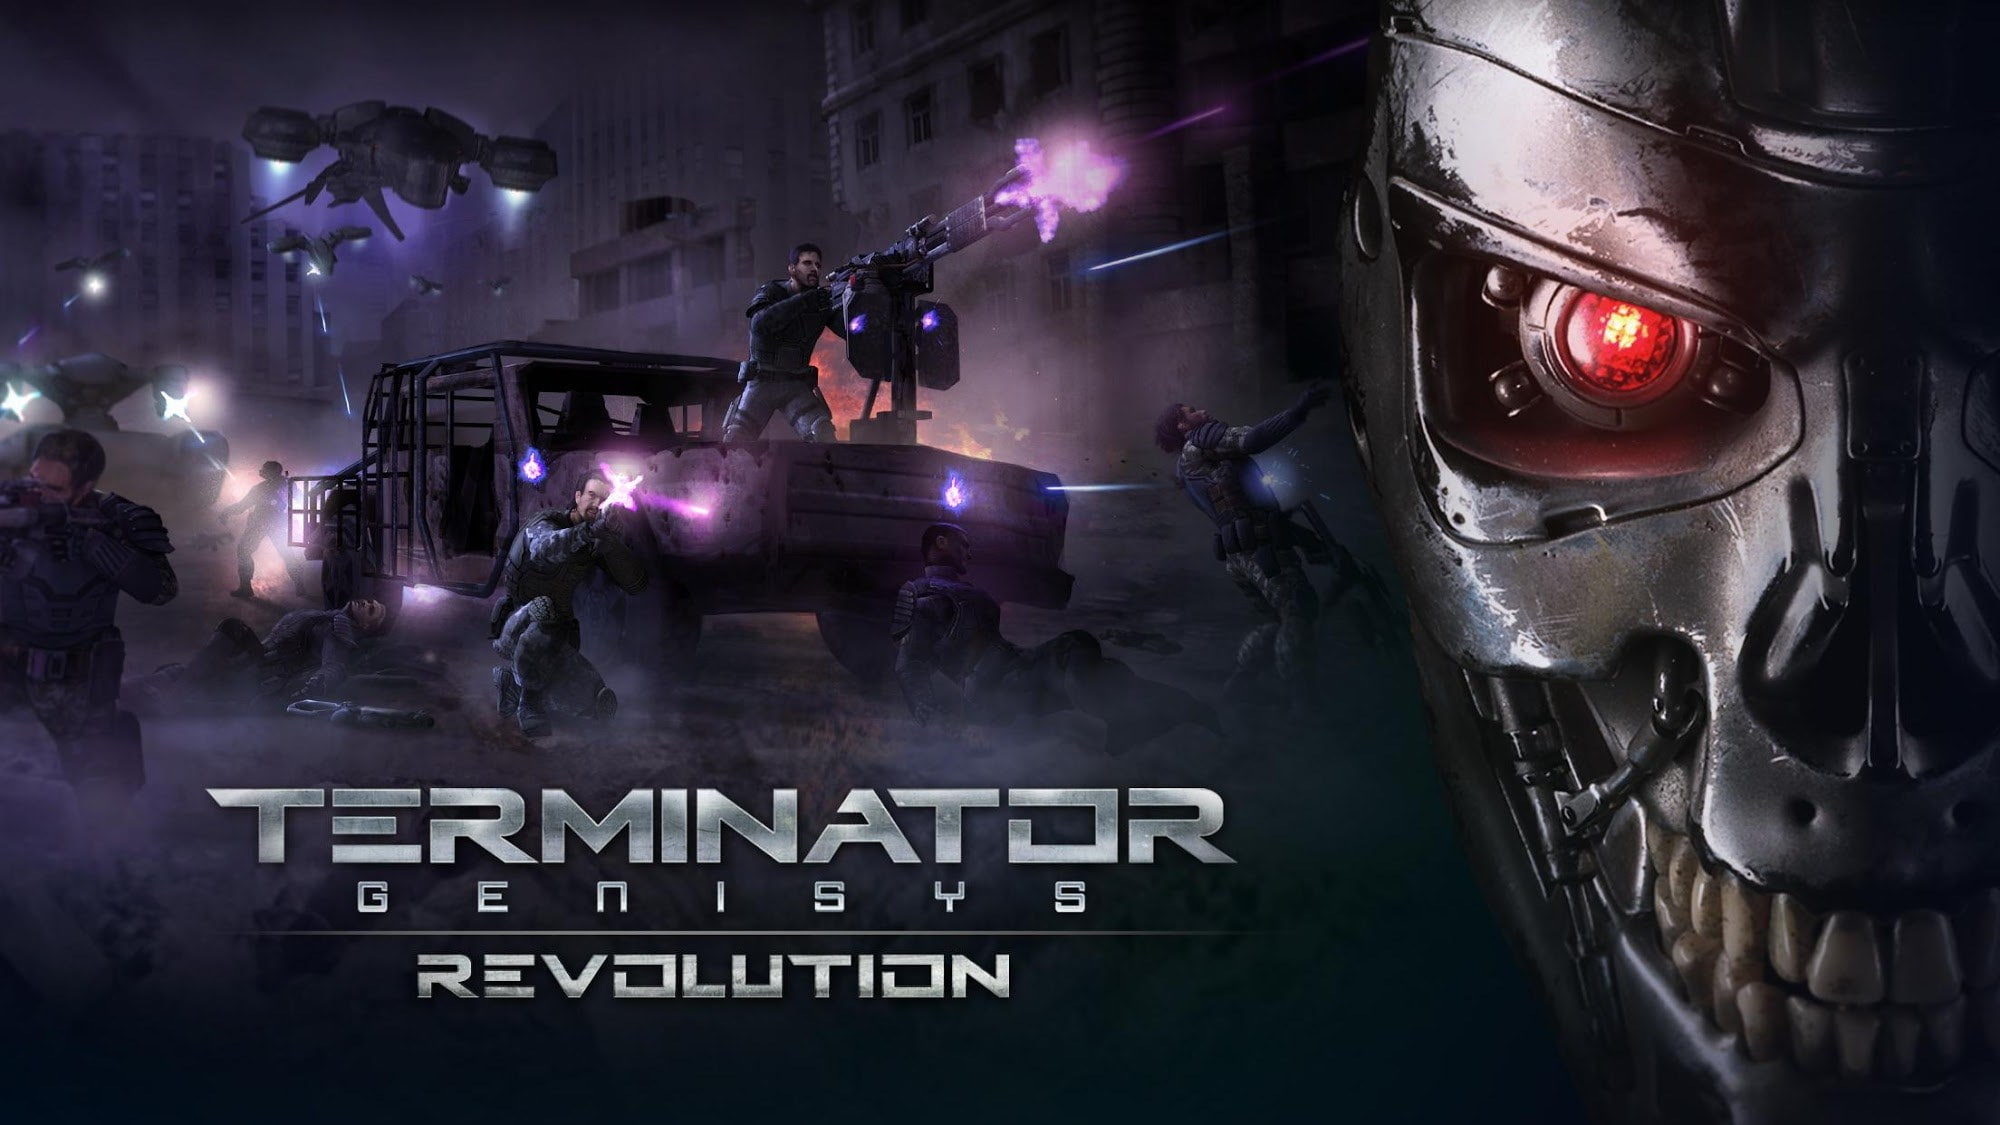 terminator genisys revolution, night, communication, text, transportation